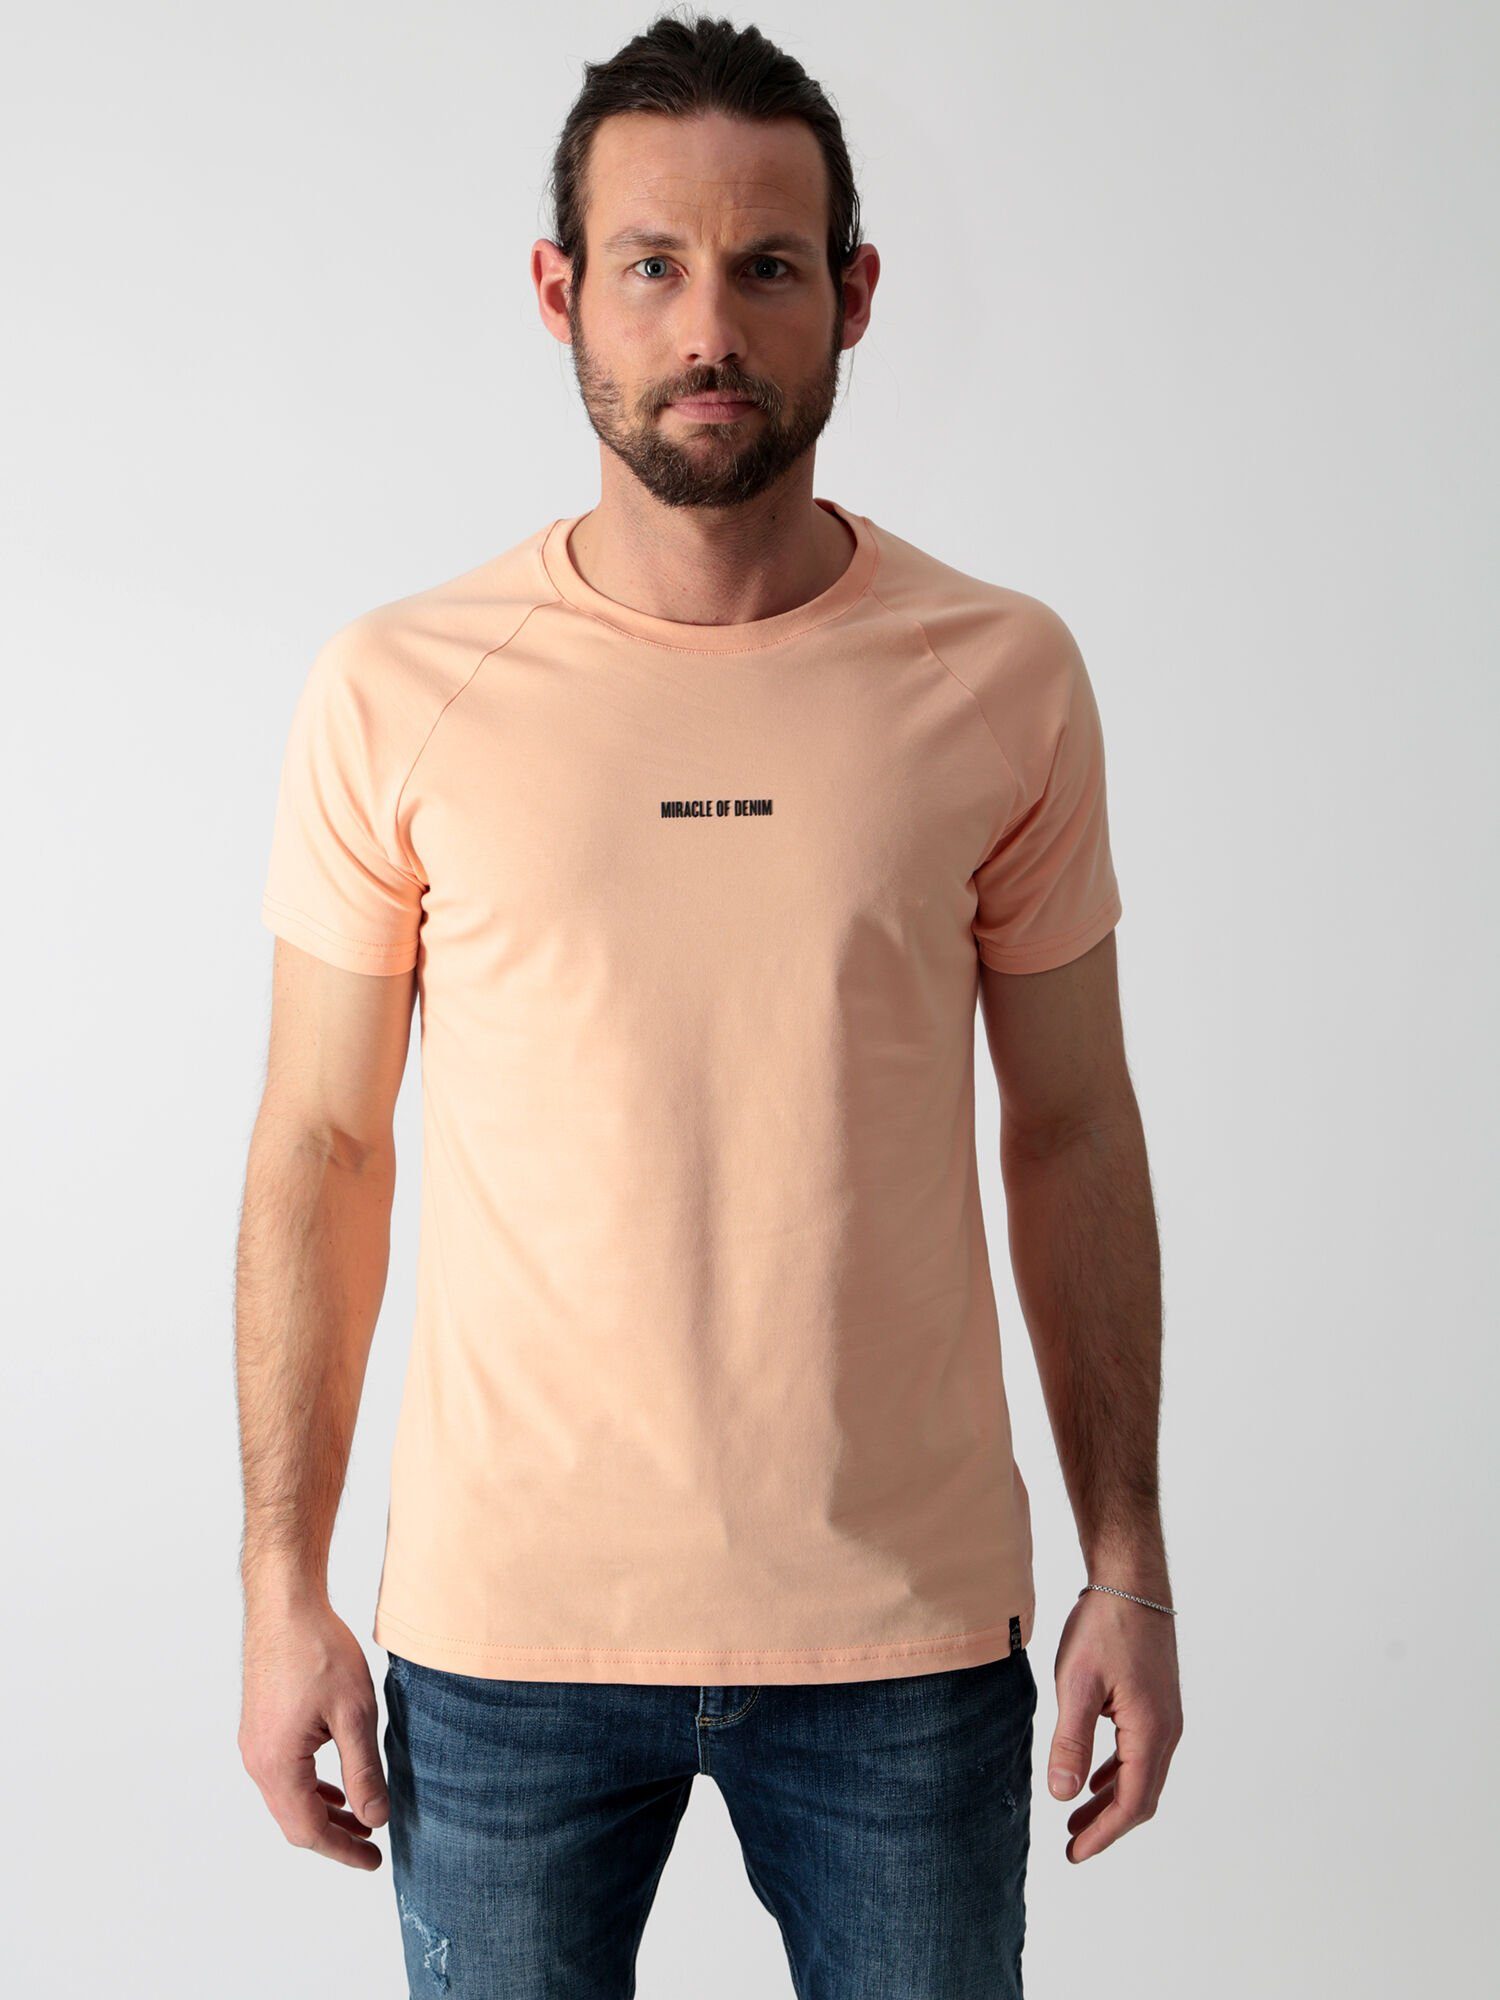 Denim Miracle mit Peach of T-Shirt Logo